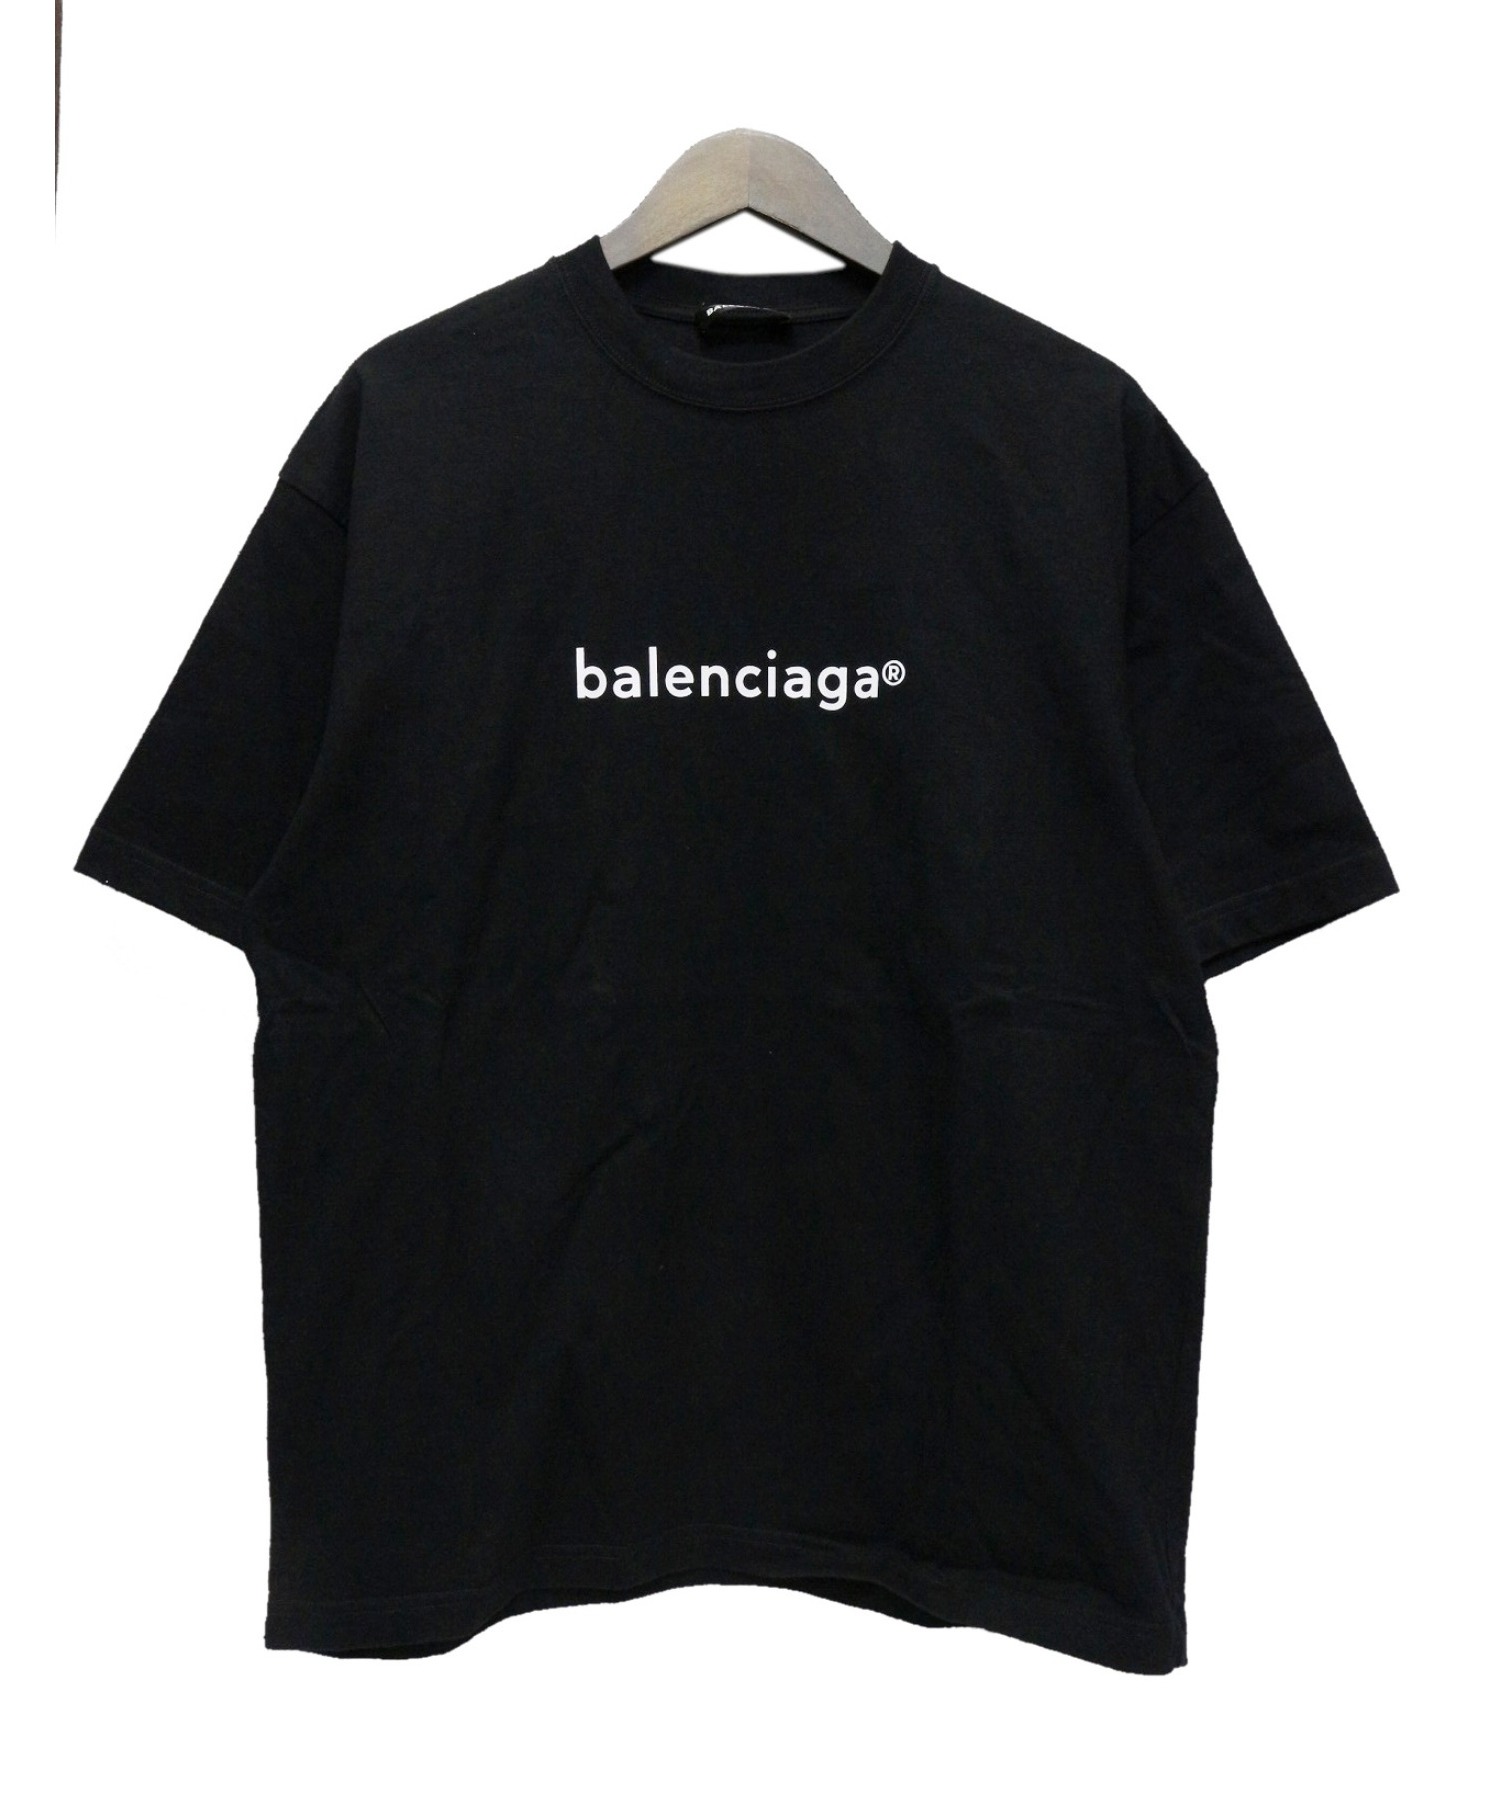 BALENCIAGA バレンシアガ ロゴプリント Tシャツ ブラック www